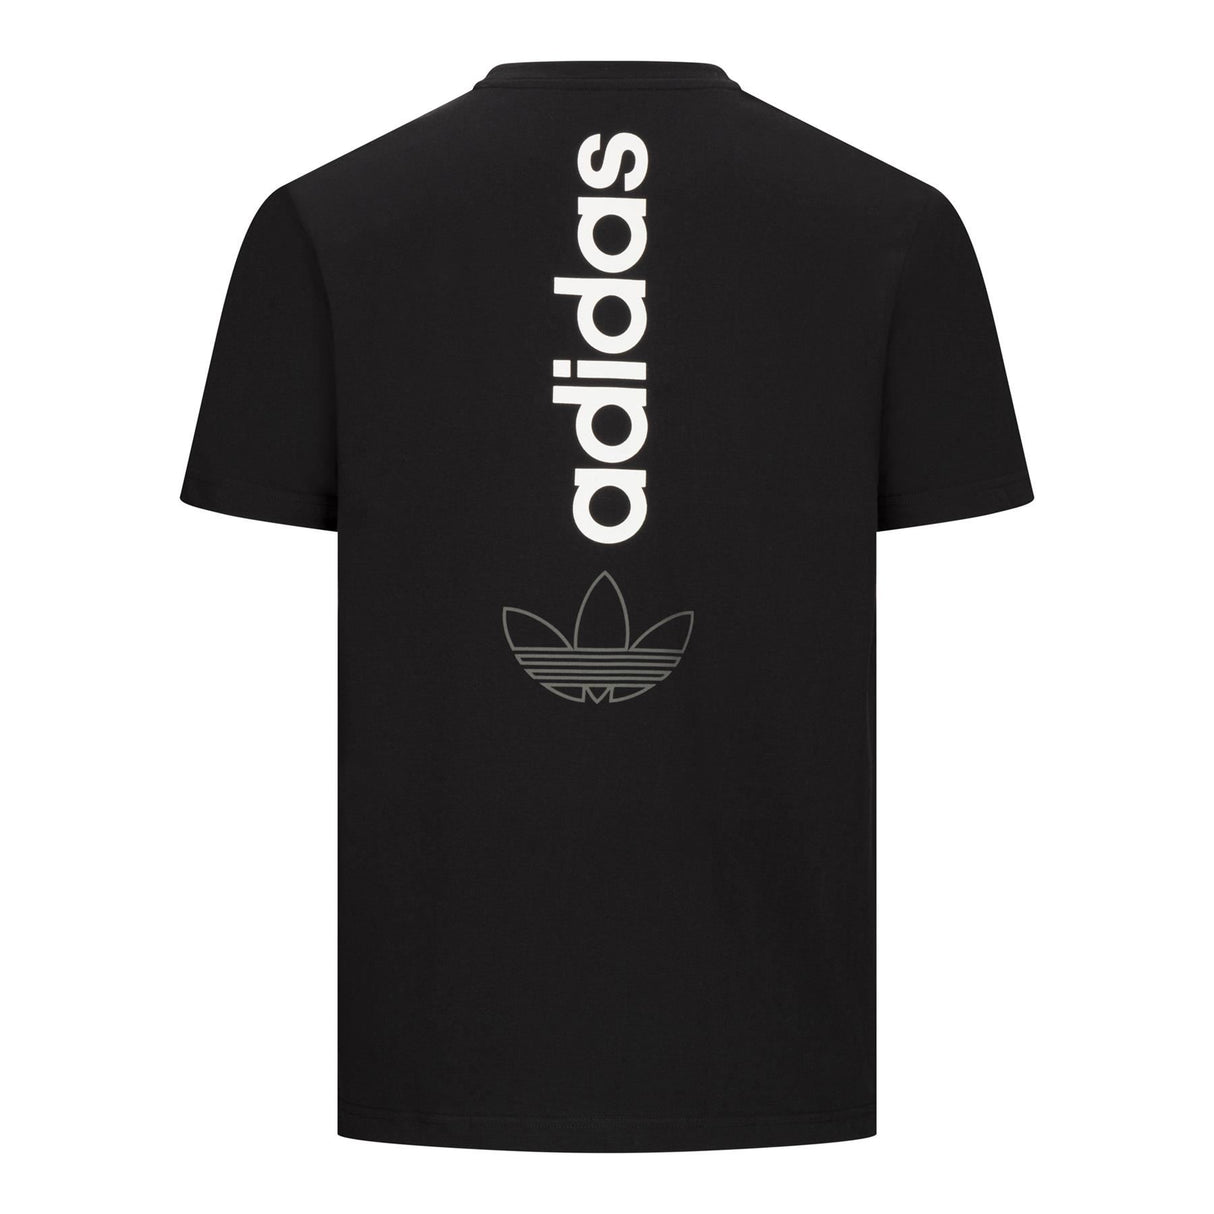 Adidas Originals Itasca 20 Short Sleeve T Shirt in Black